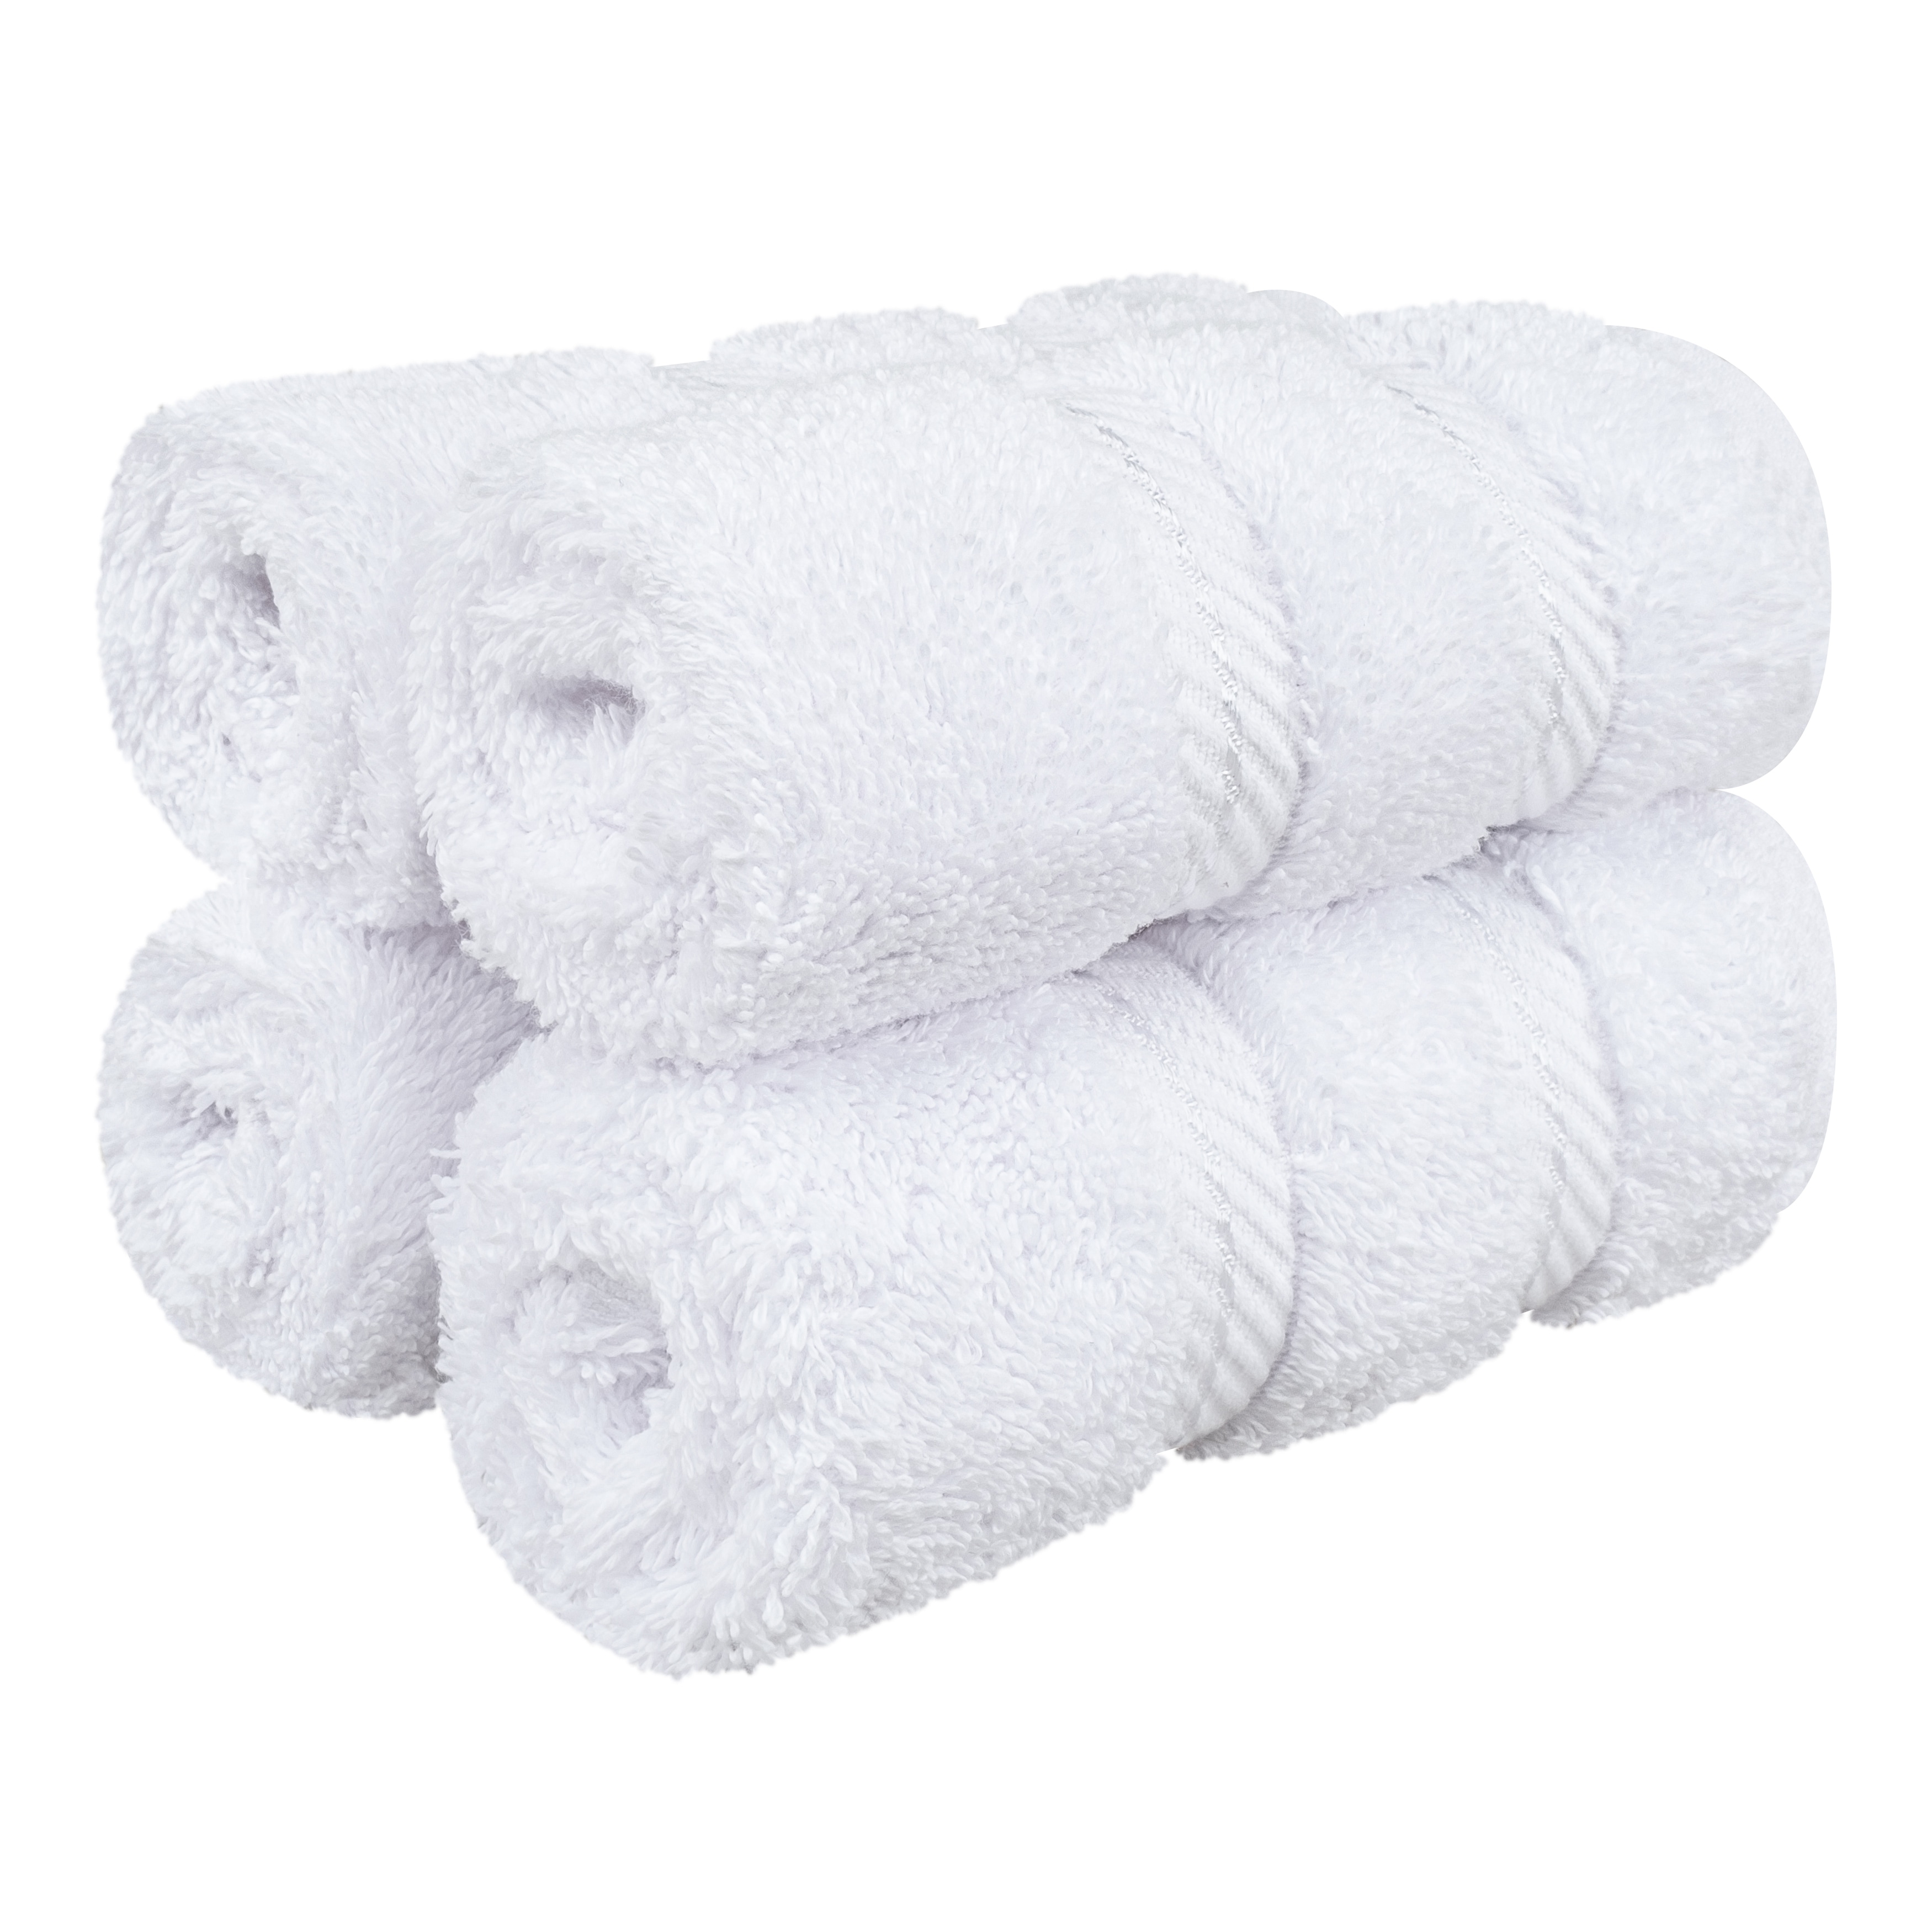 https://ak1.ostkcdn.com/images/products/is/images/direct/59aca16f54950a5a4f025dc67d098b63431a5a2b/American-Soft-Linen-Premium-Genuine-Turkish-Cotton-4-Piece-Washcloth-Set.jpg